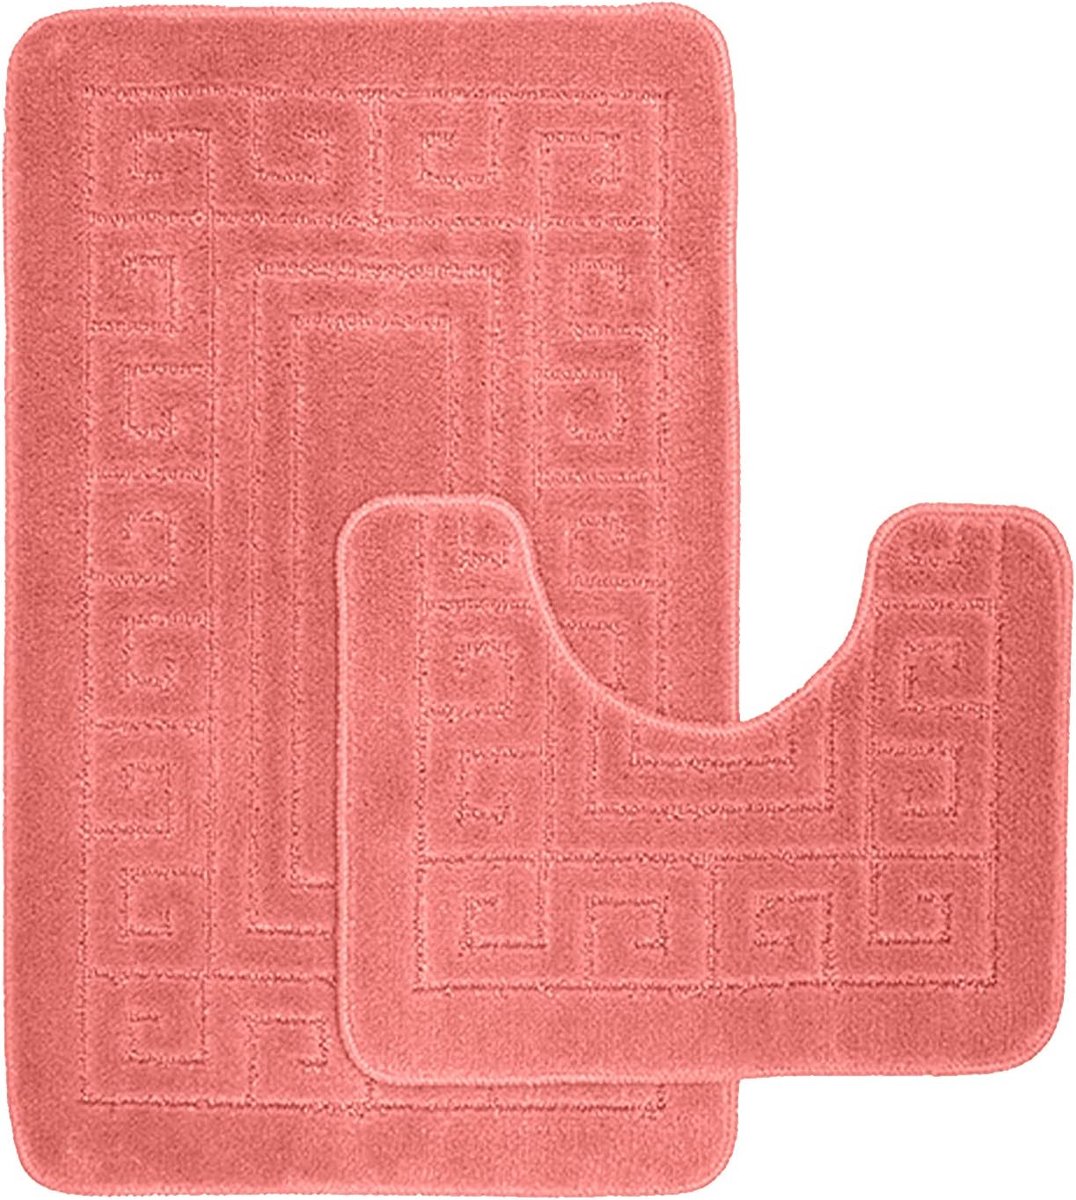 Anti-slip badmat in Griekse stijl - Set van 2 badmatten - Inclusief 1 badmat (50 × 80 cm) en 1 toiletmat (50 × 40 cm) - Roze